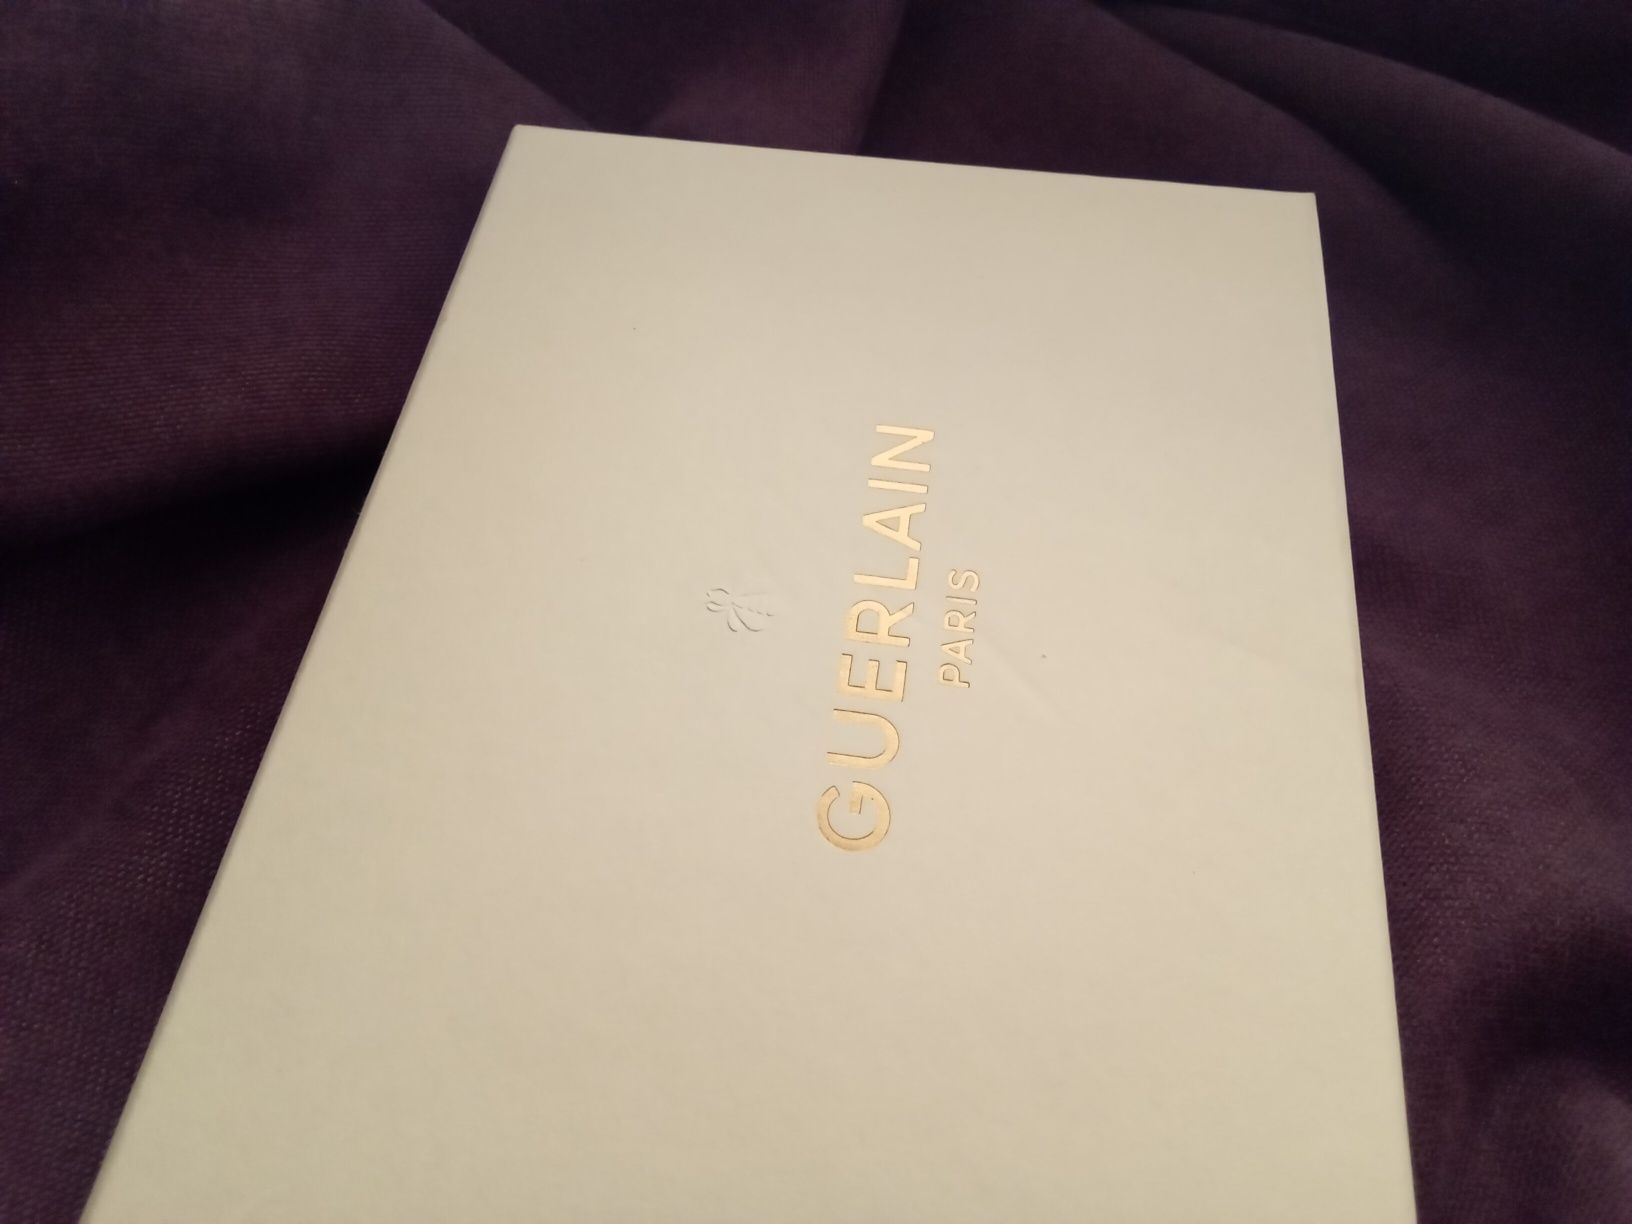 Guerlain подарункова коробка упаковка